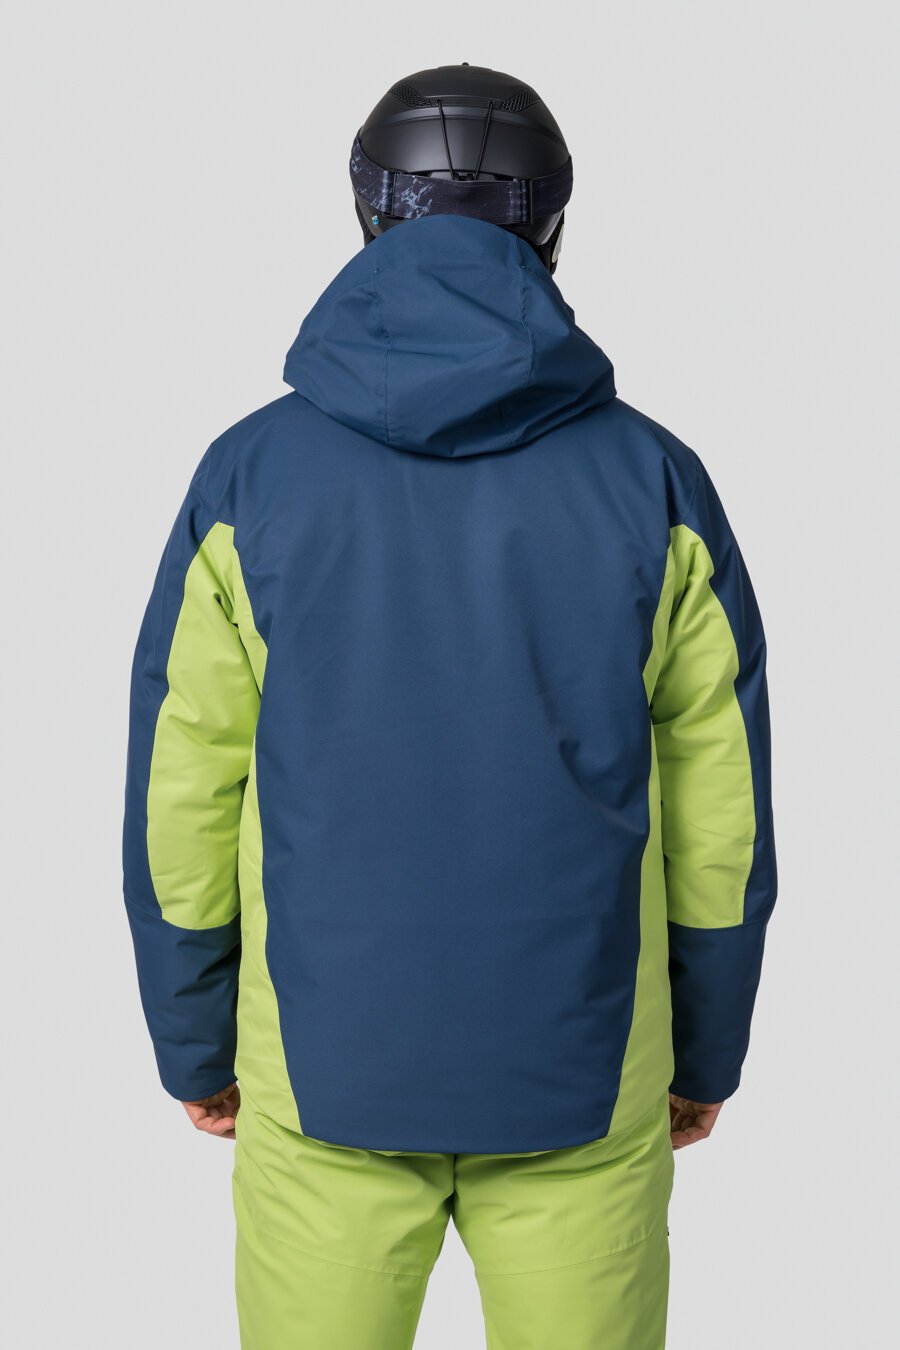 Jacket HANNAH KELTON Man, midnight navy/lime green - Hannah - Outdoor  clothing and equipment